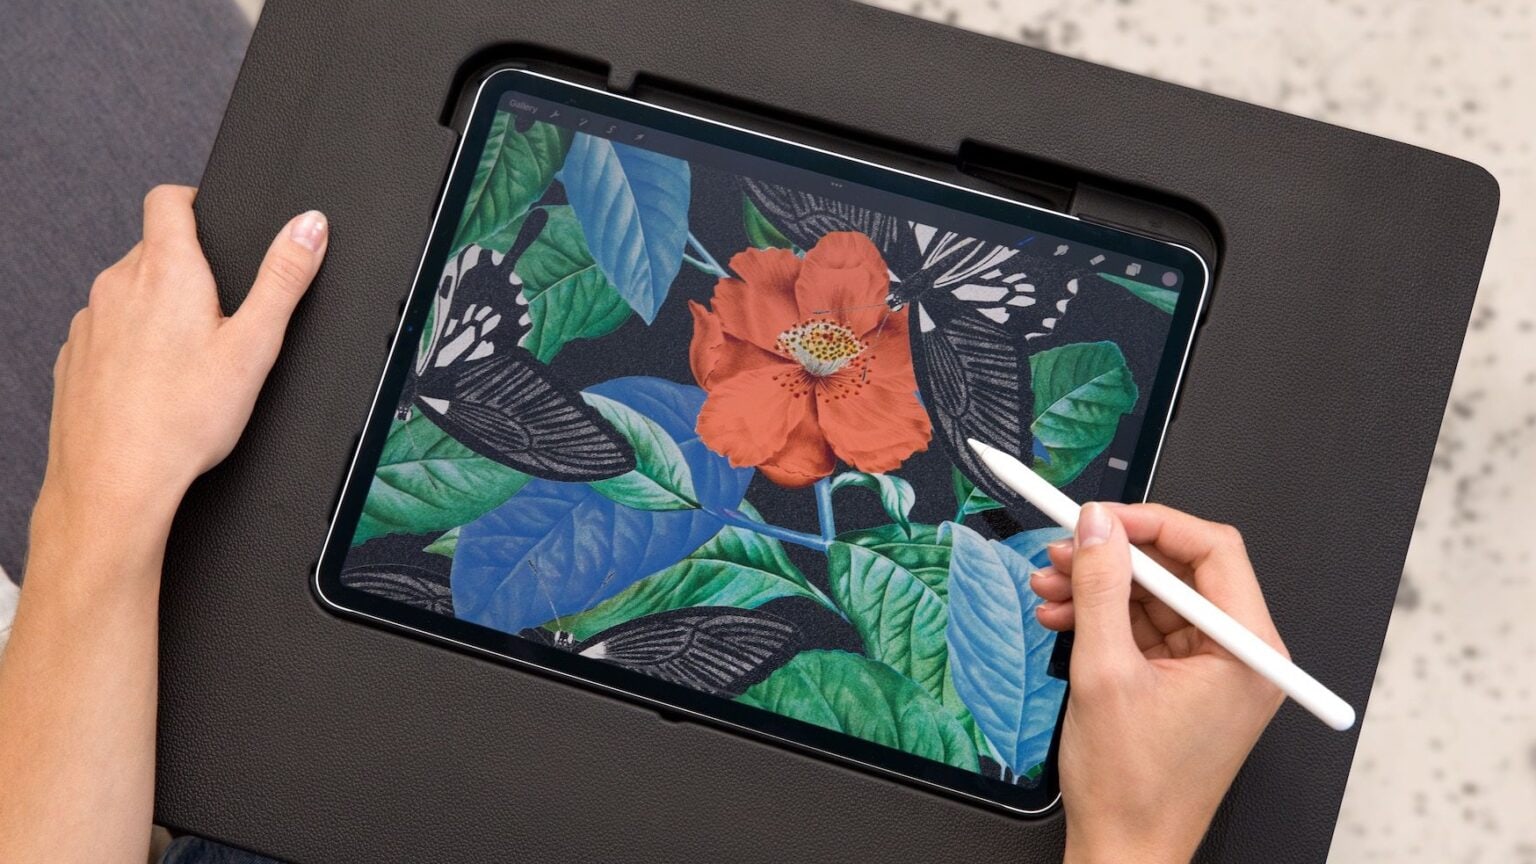 Astropad Darkboard makes drawing on an iPad more comfortable